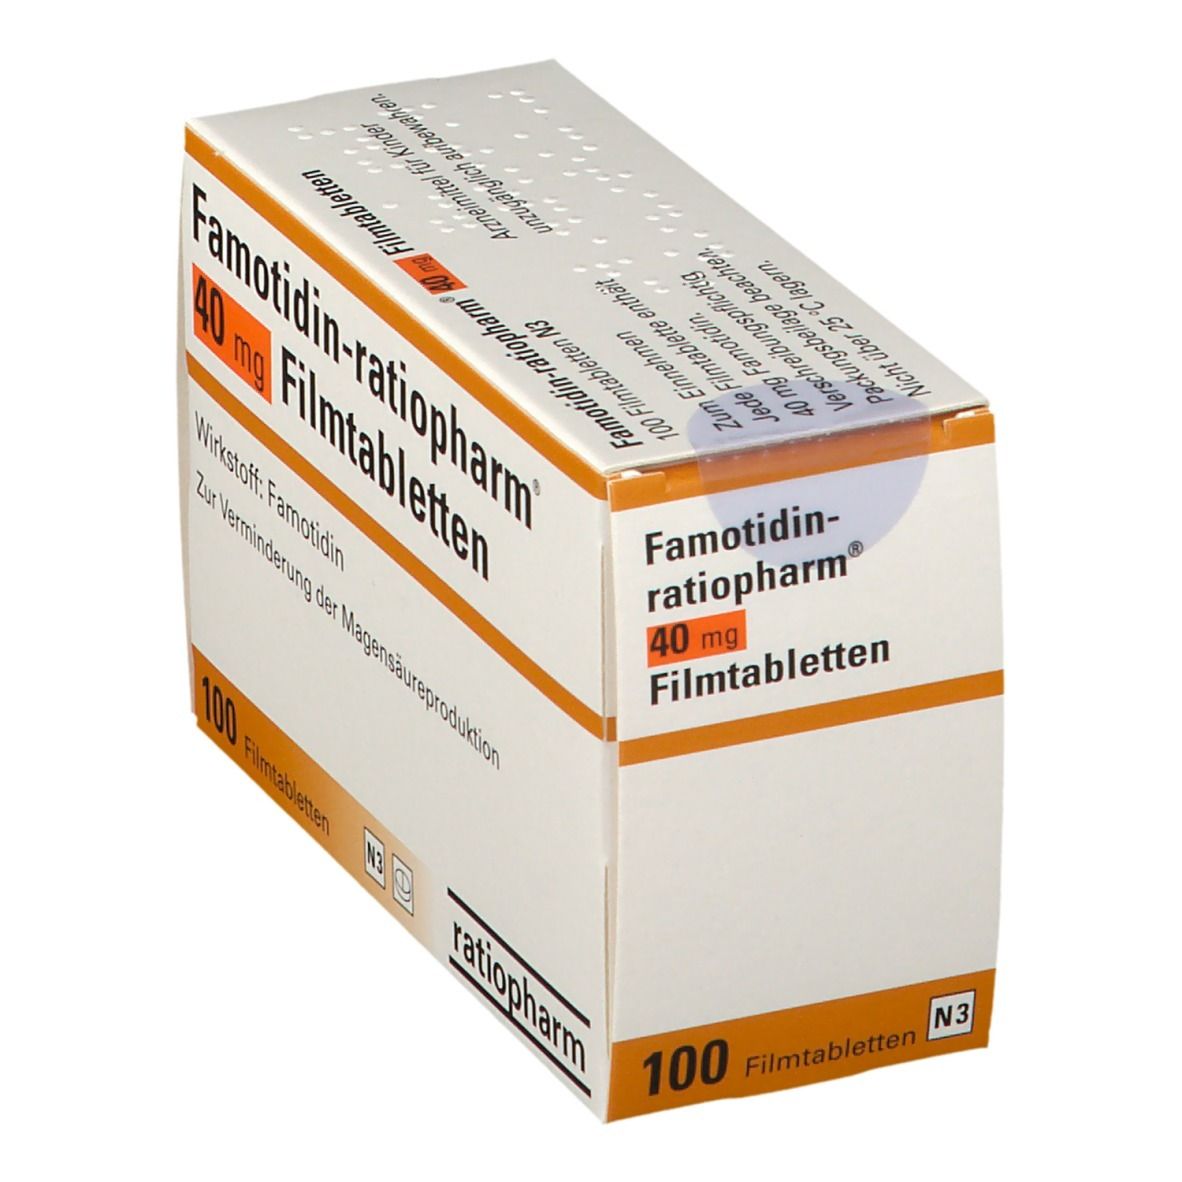 Famotidin-ratiopharm® 40 mg